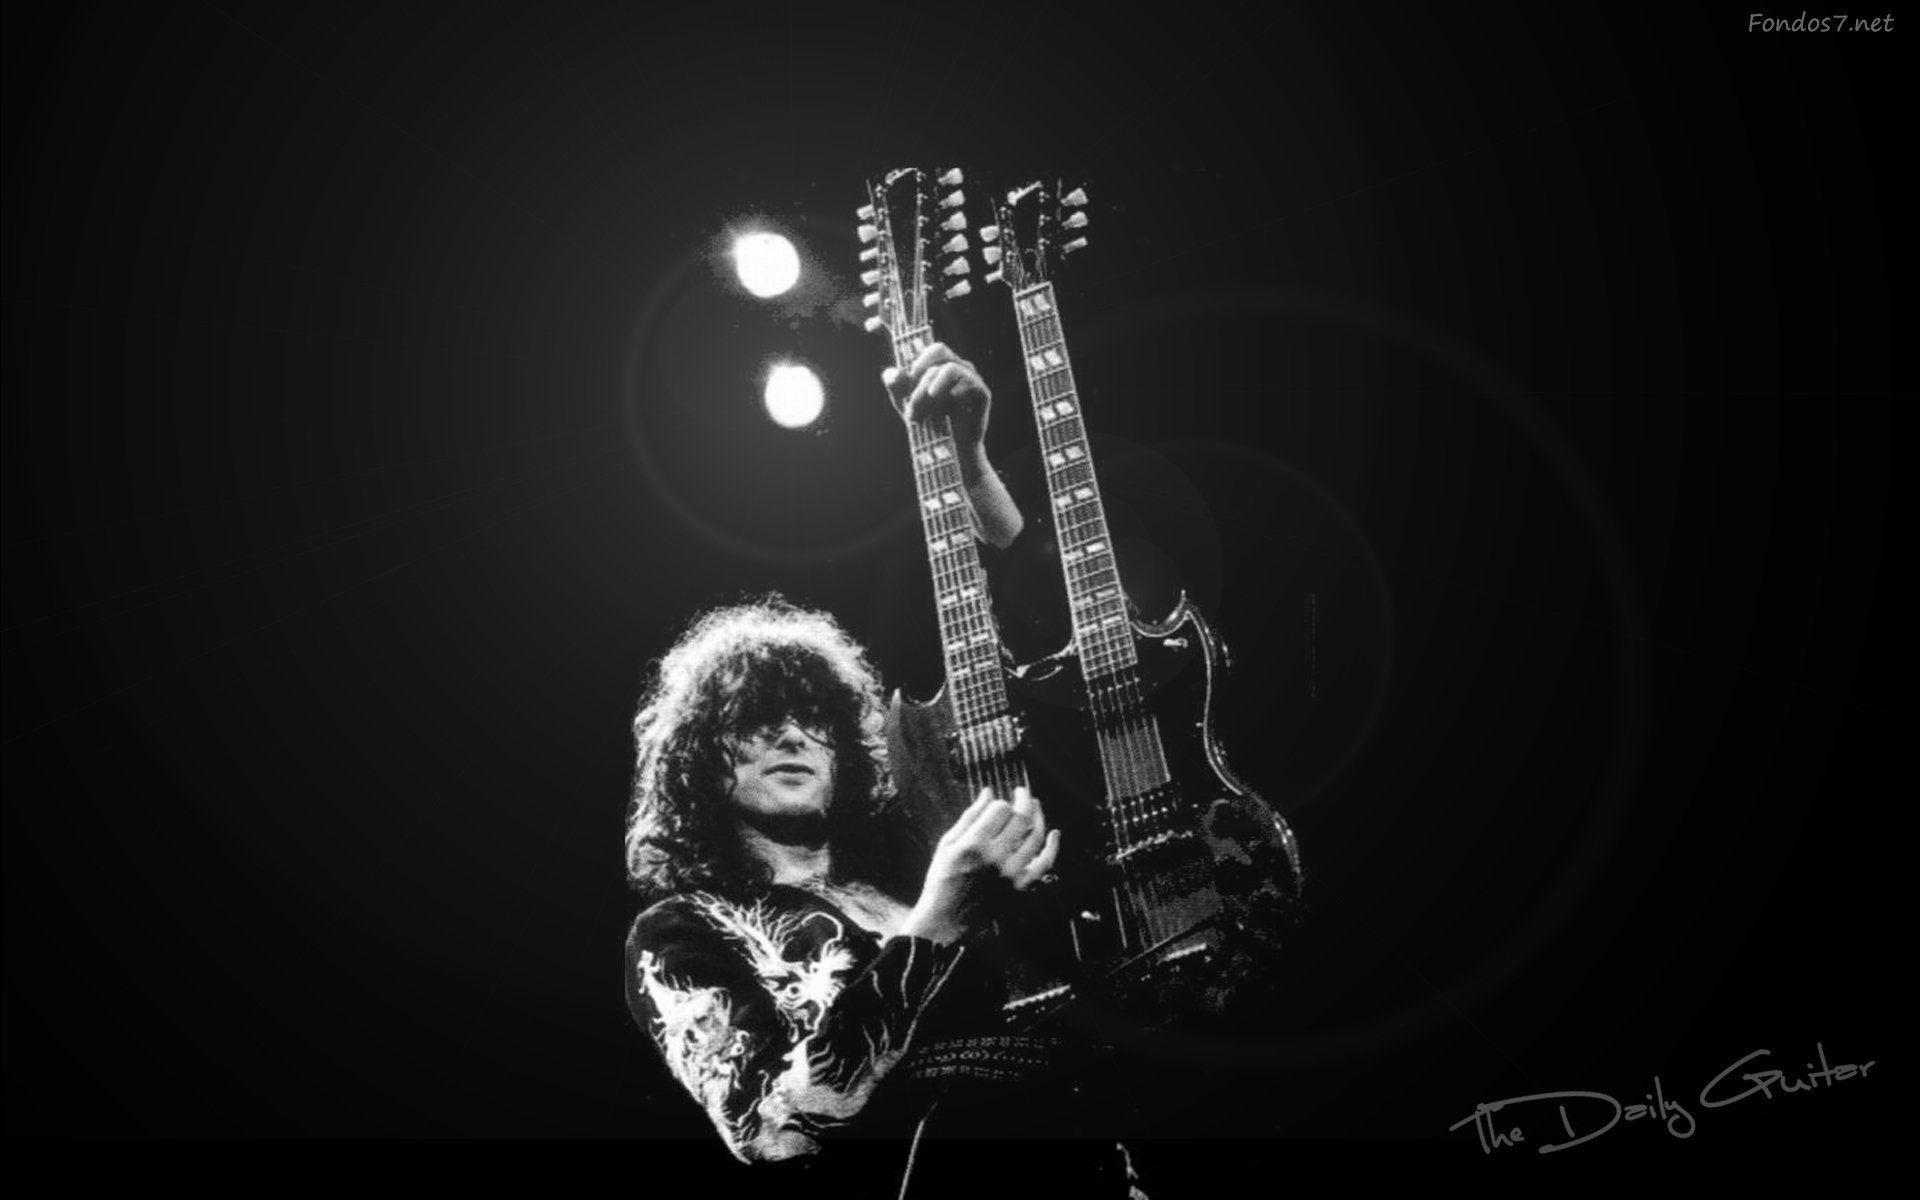 Gibson Les Paul Wallpaper, Gibson Les Paul Picture